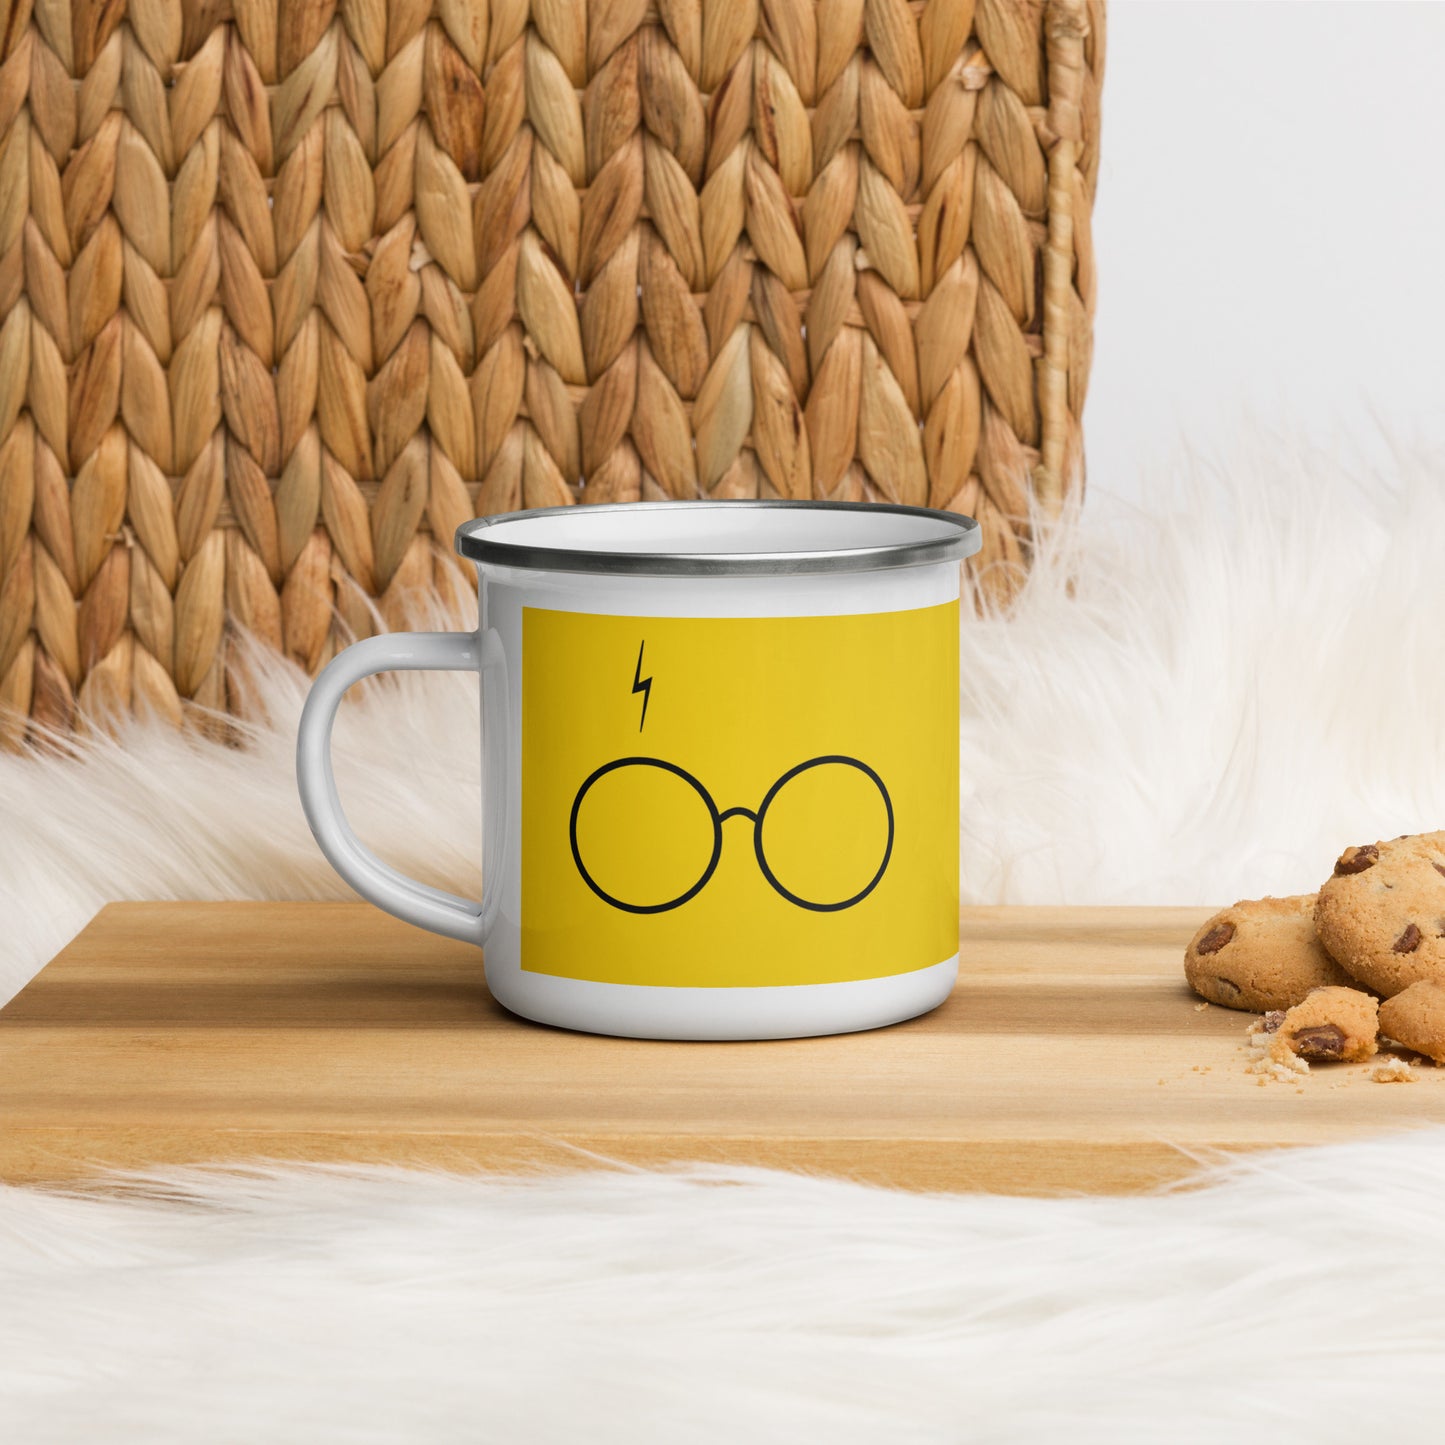 Harry Potter Glasses Mug